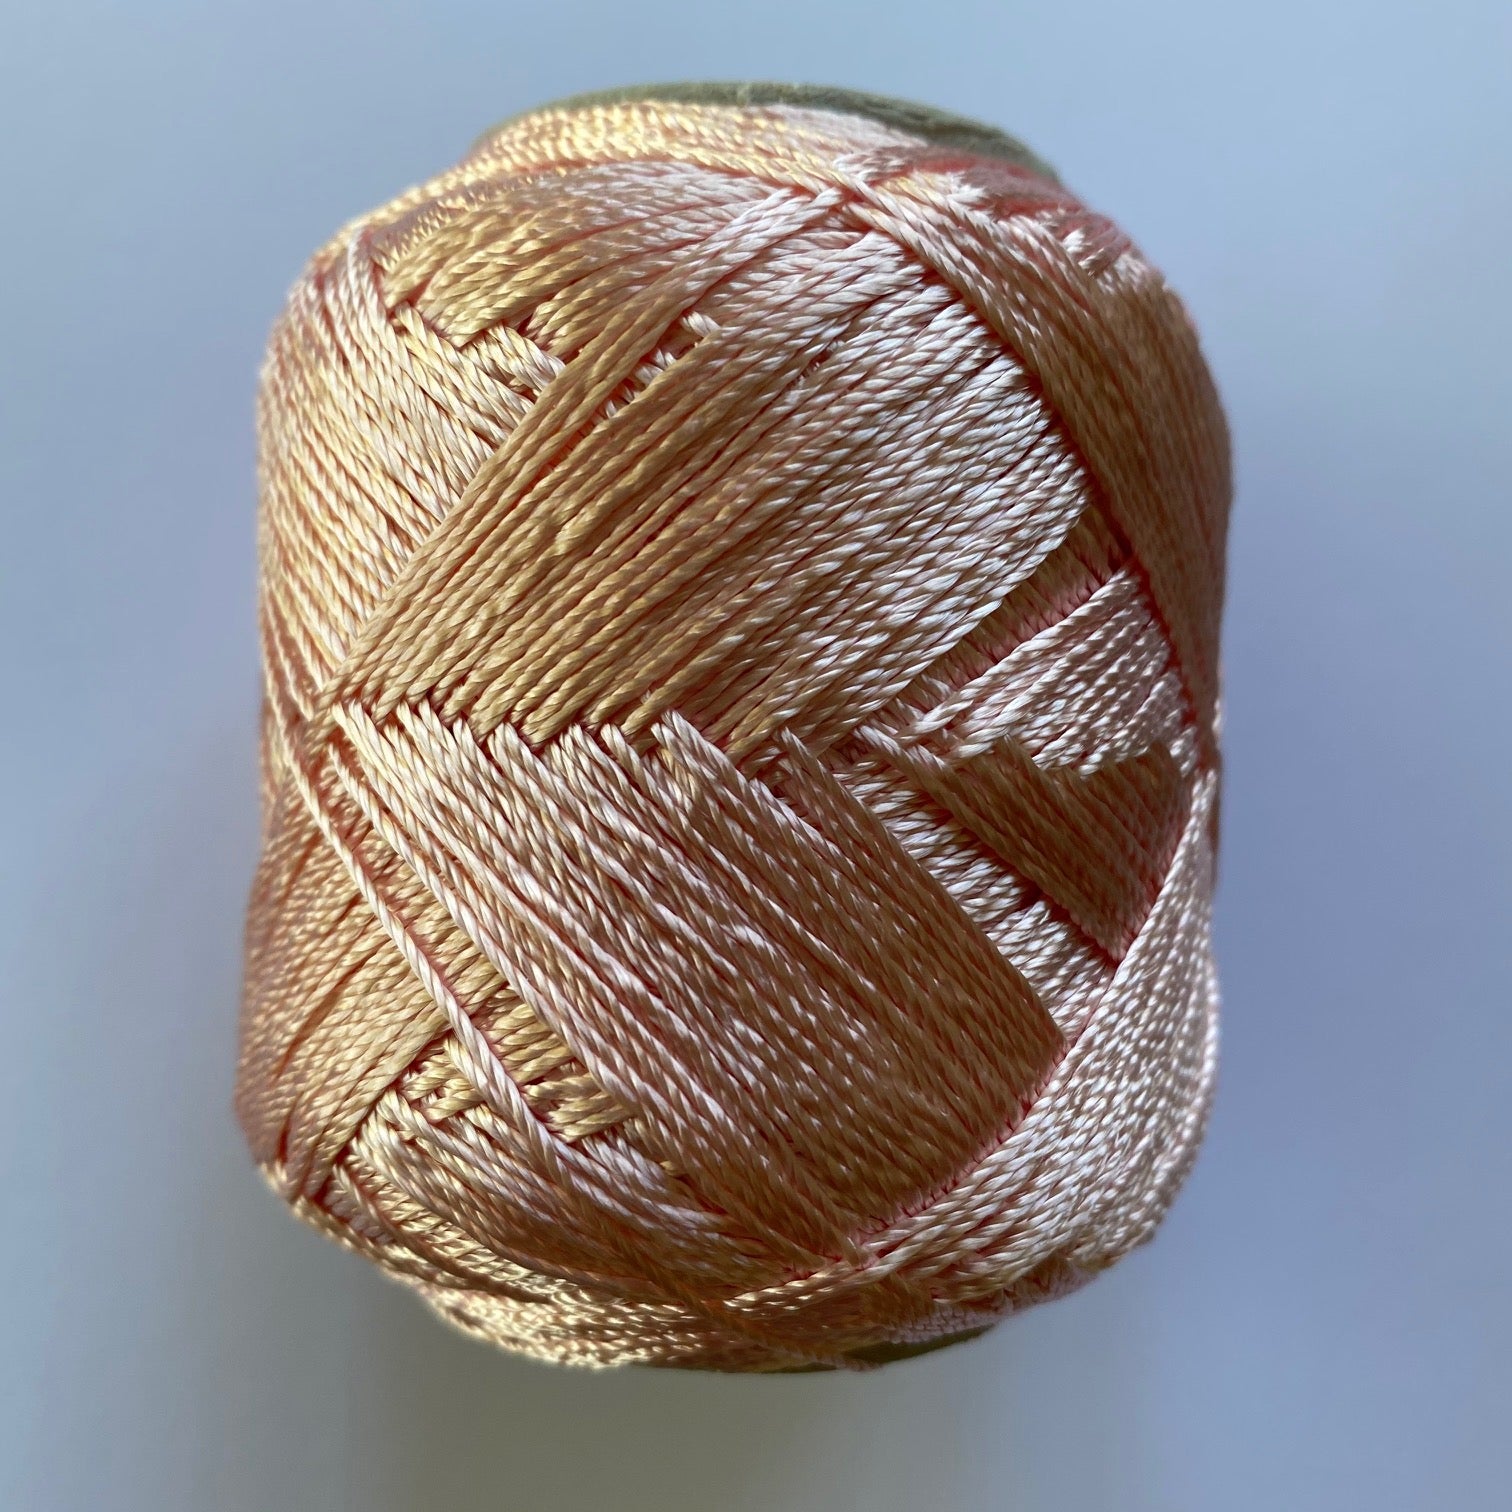  Gold Yarn For Crochet